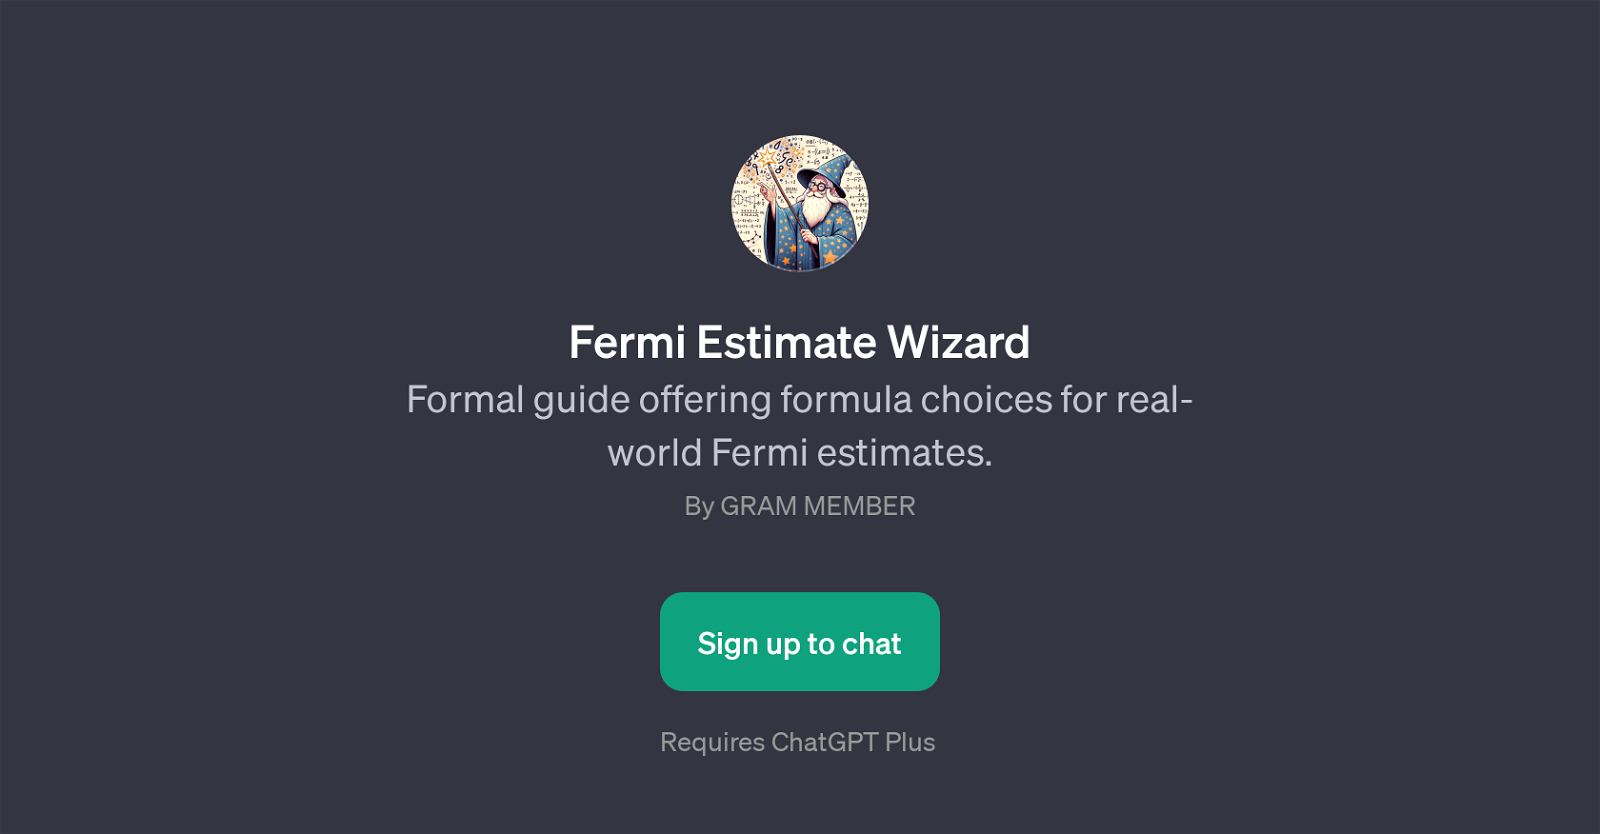 Fermi Estimate Wizard website